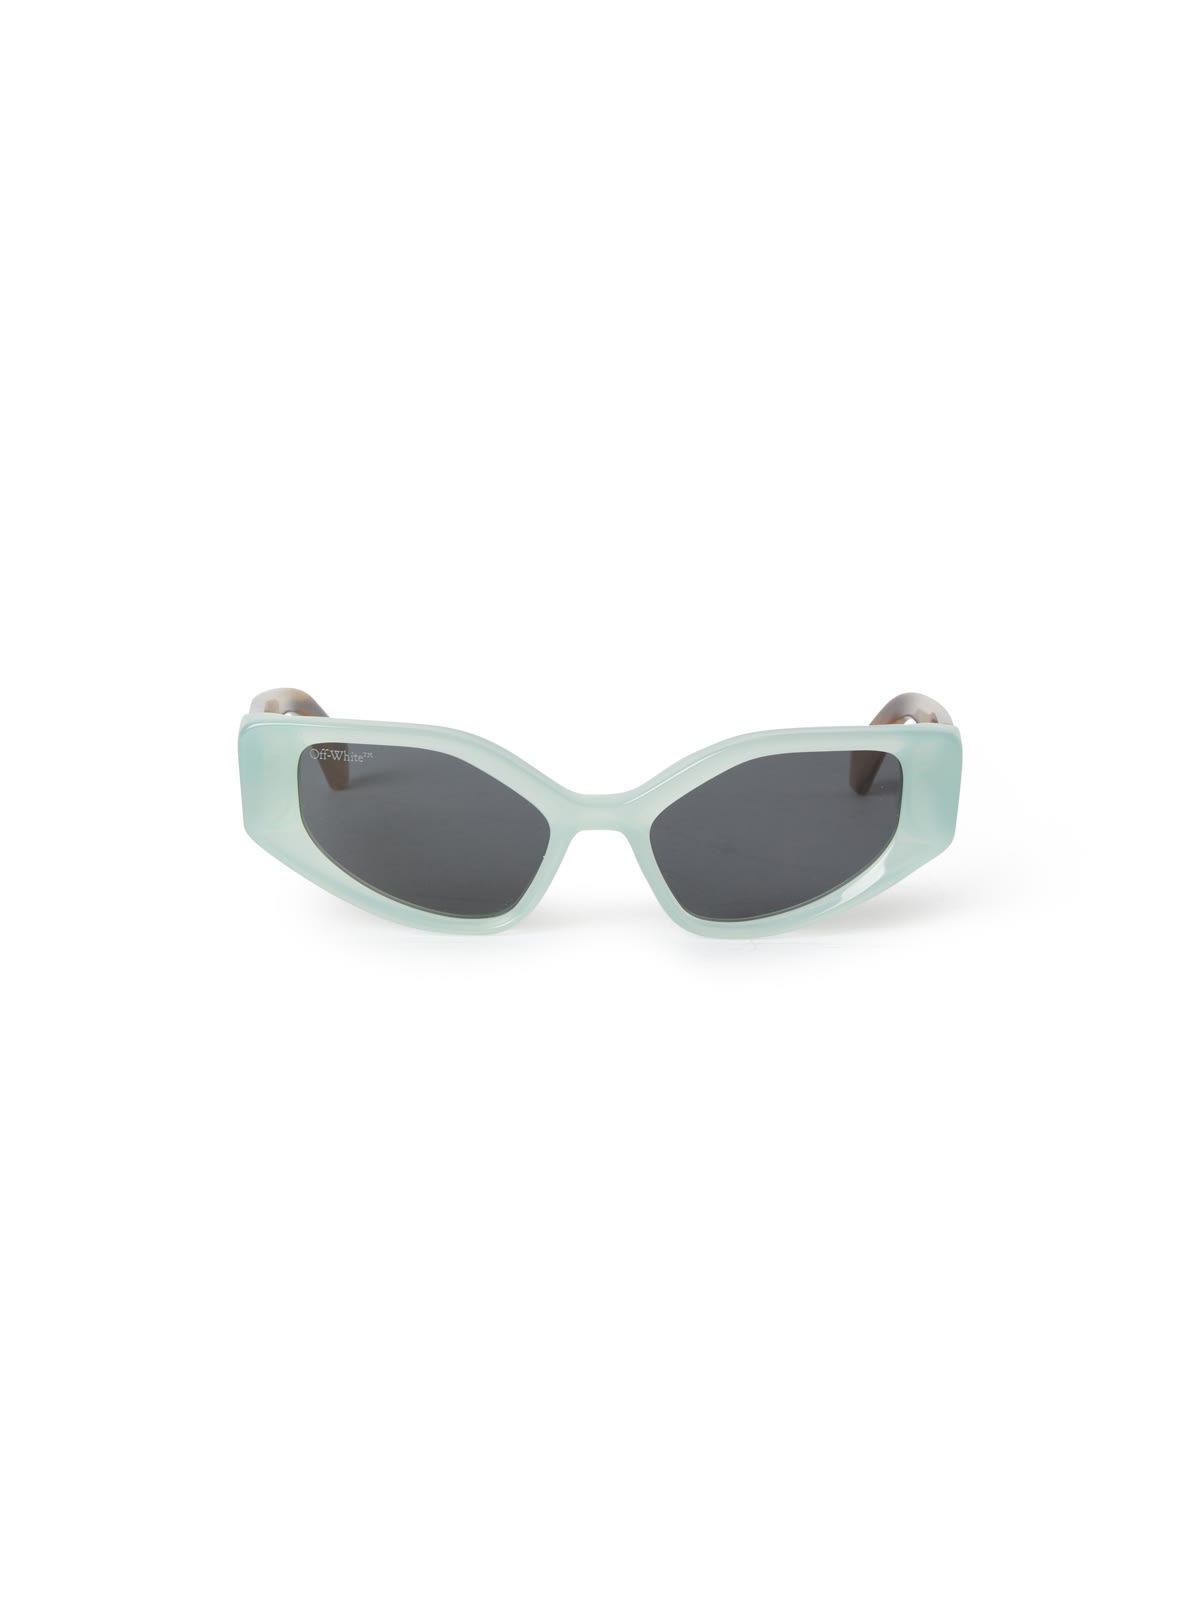 Off-White MEMPHIS SUNGLASSES Sunglasses